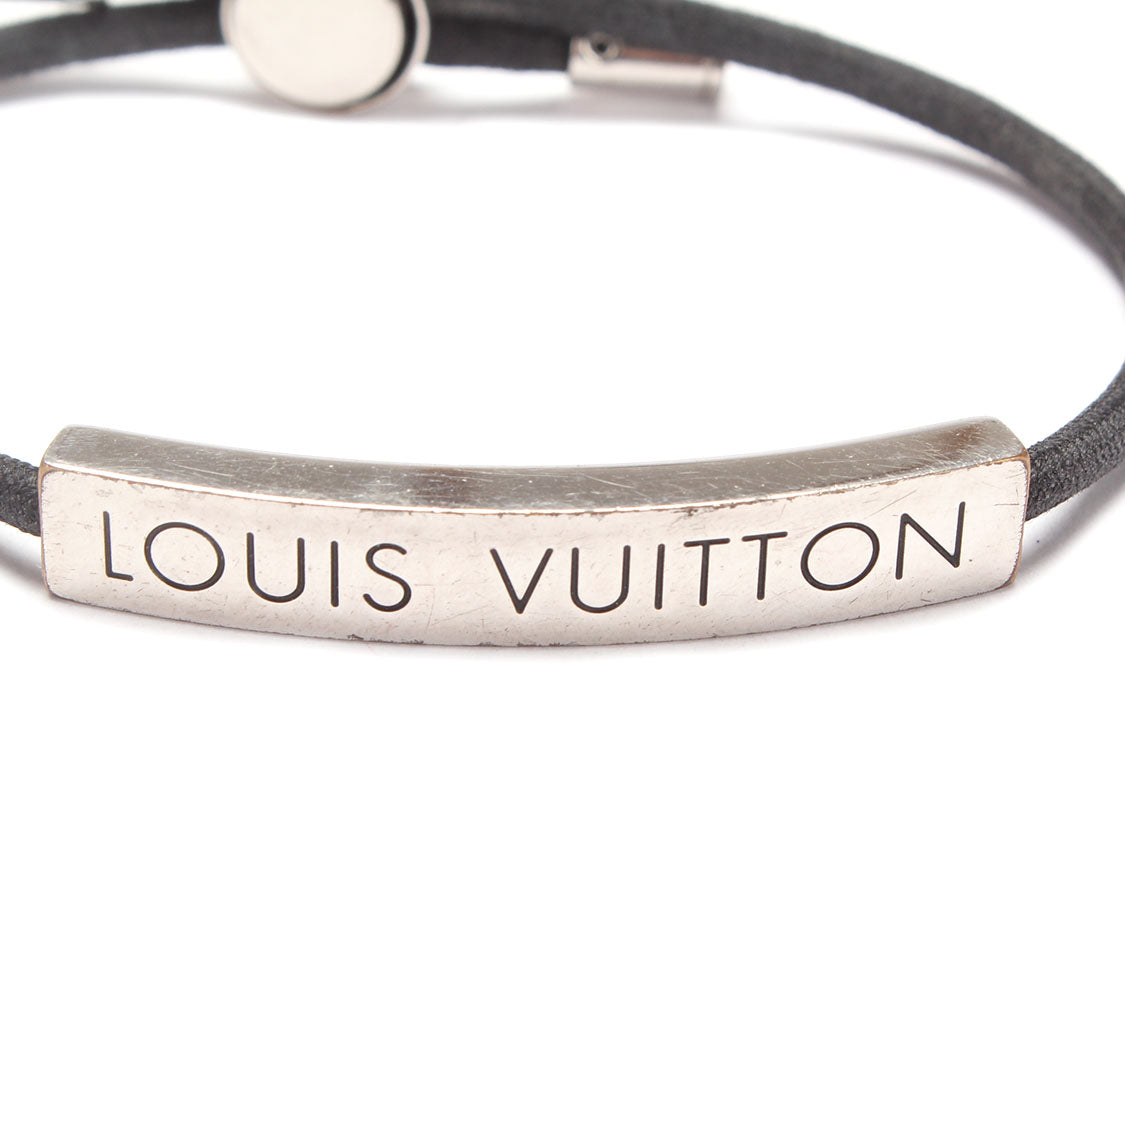 Louis Vuitton Bracelet Space LV M67417 Nylon Black LOUIS VUITTON